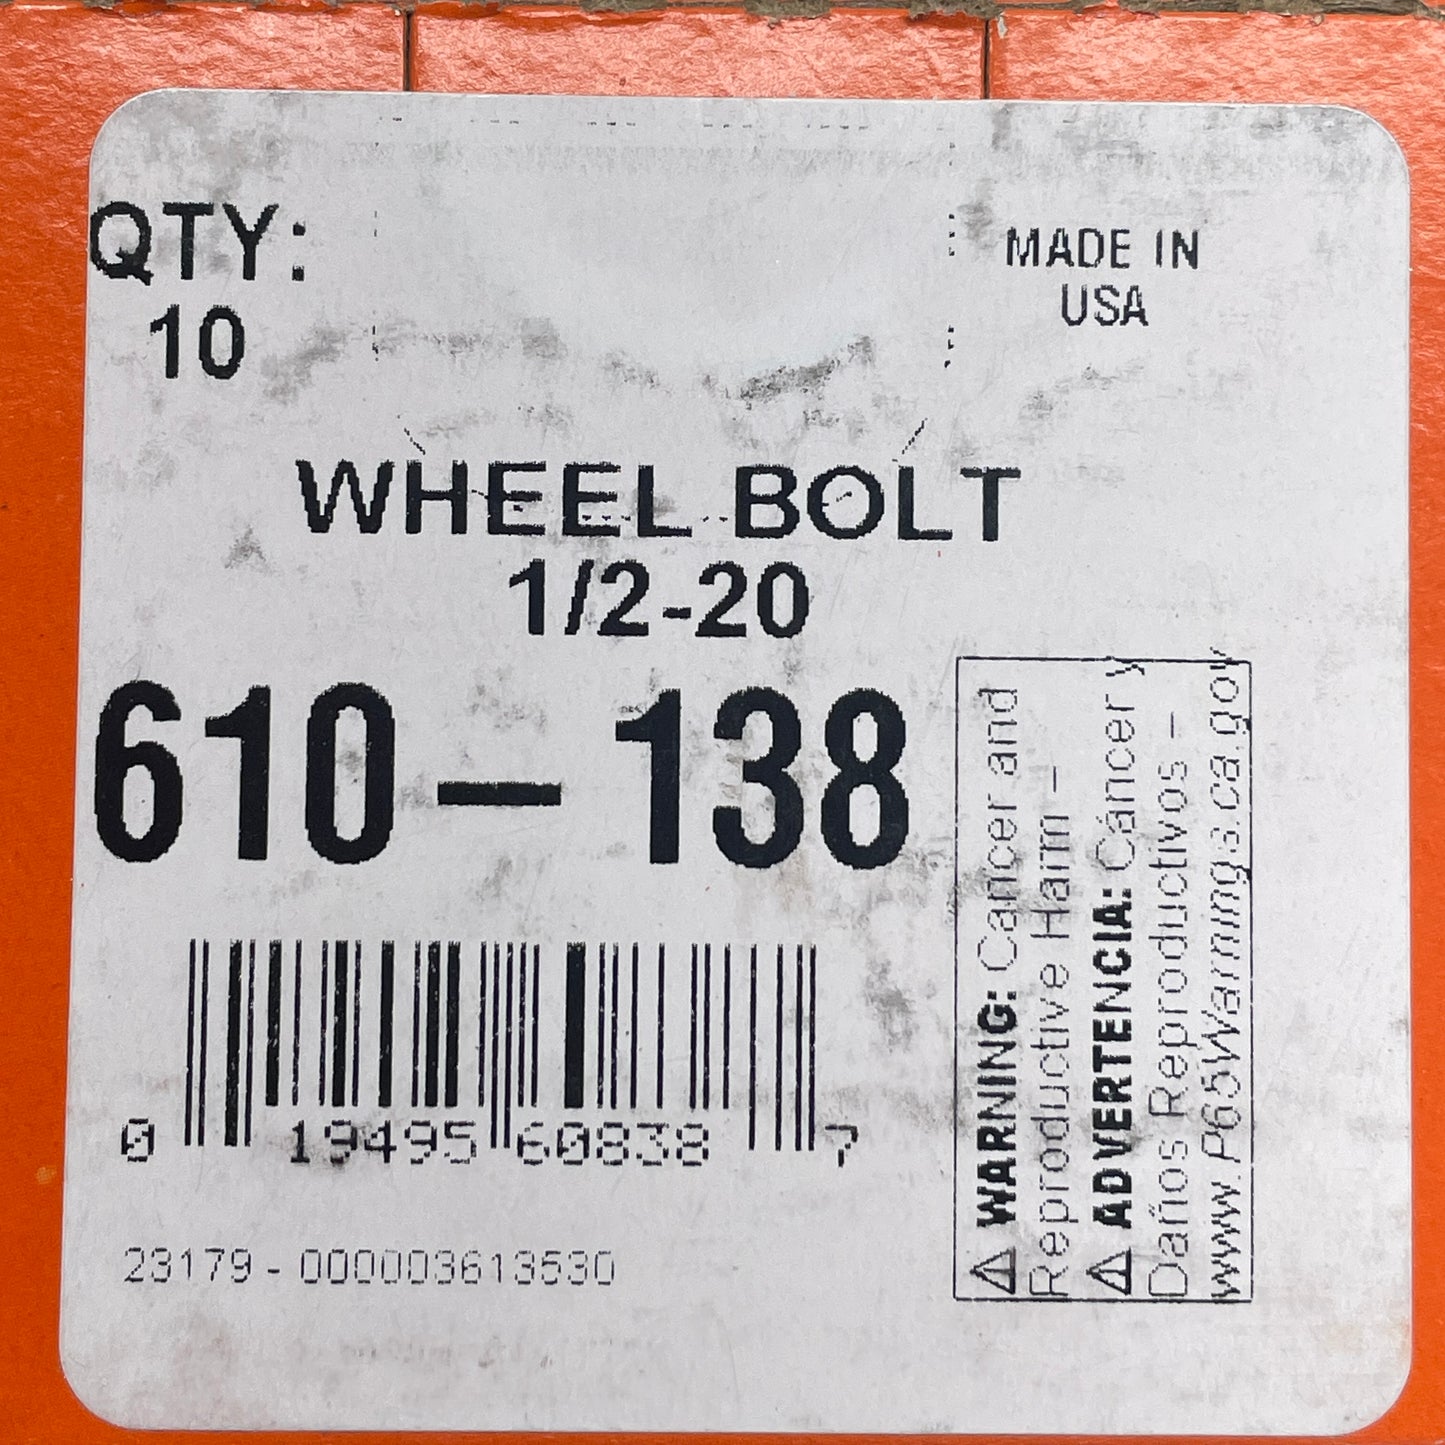 DORMAN Steel Wheel Bolt 1/2-20 610-138